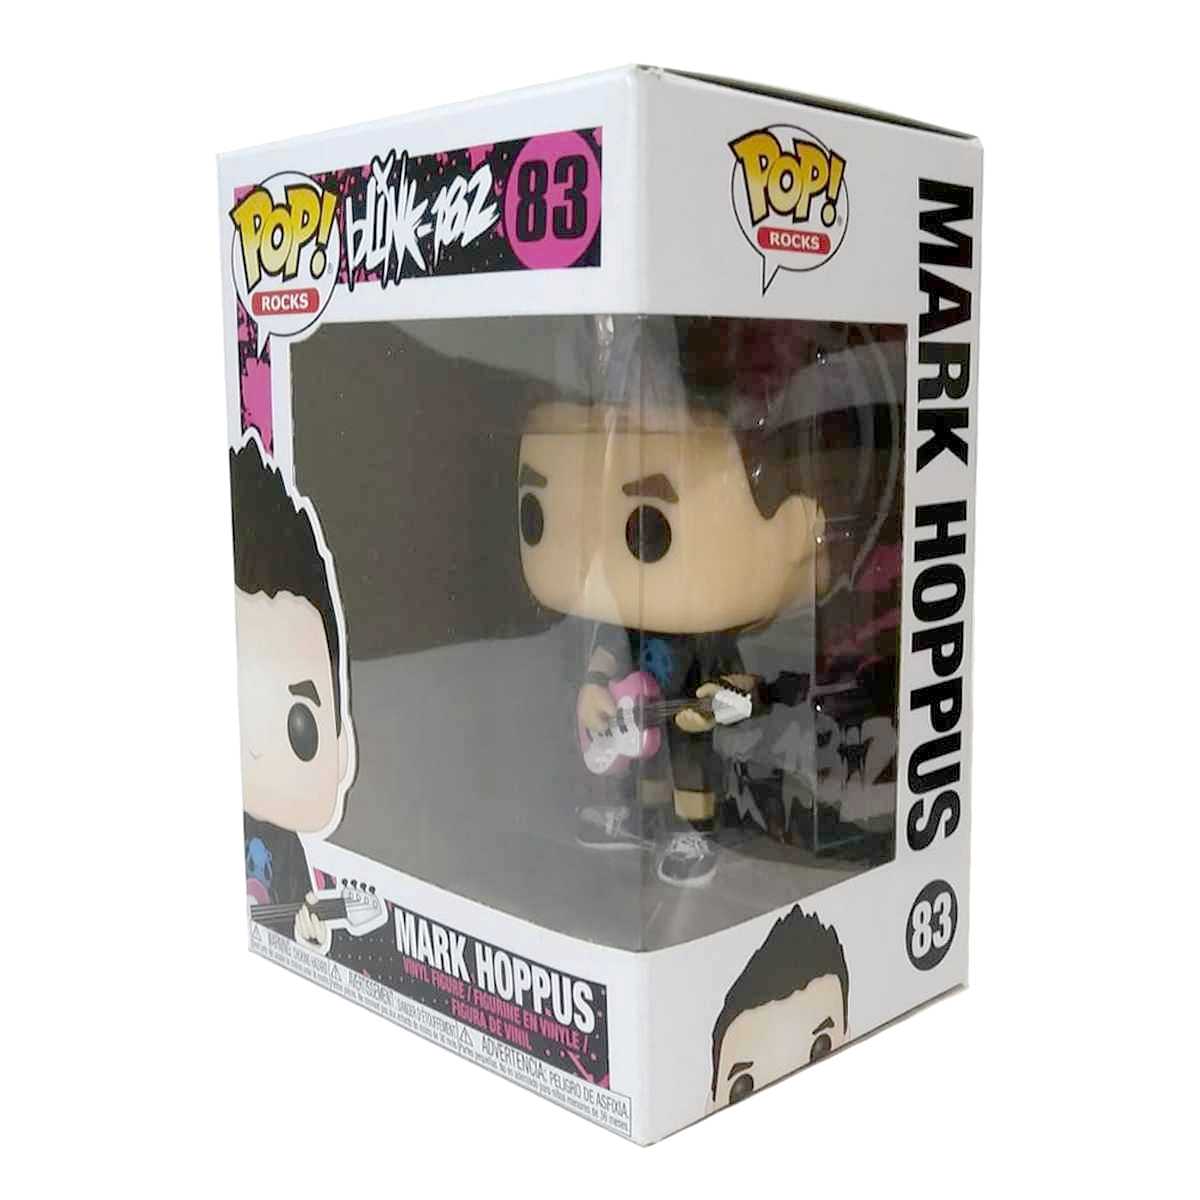 Funko Pop! Rocks Blink-182 Mark Hoppus vinyl figure número 83 